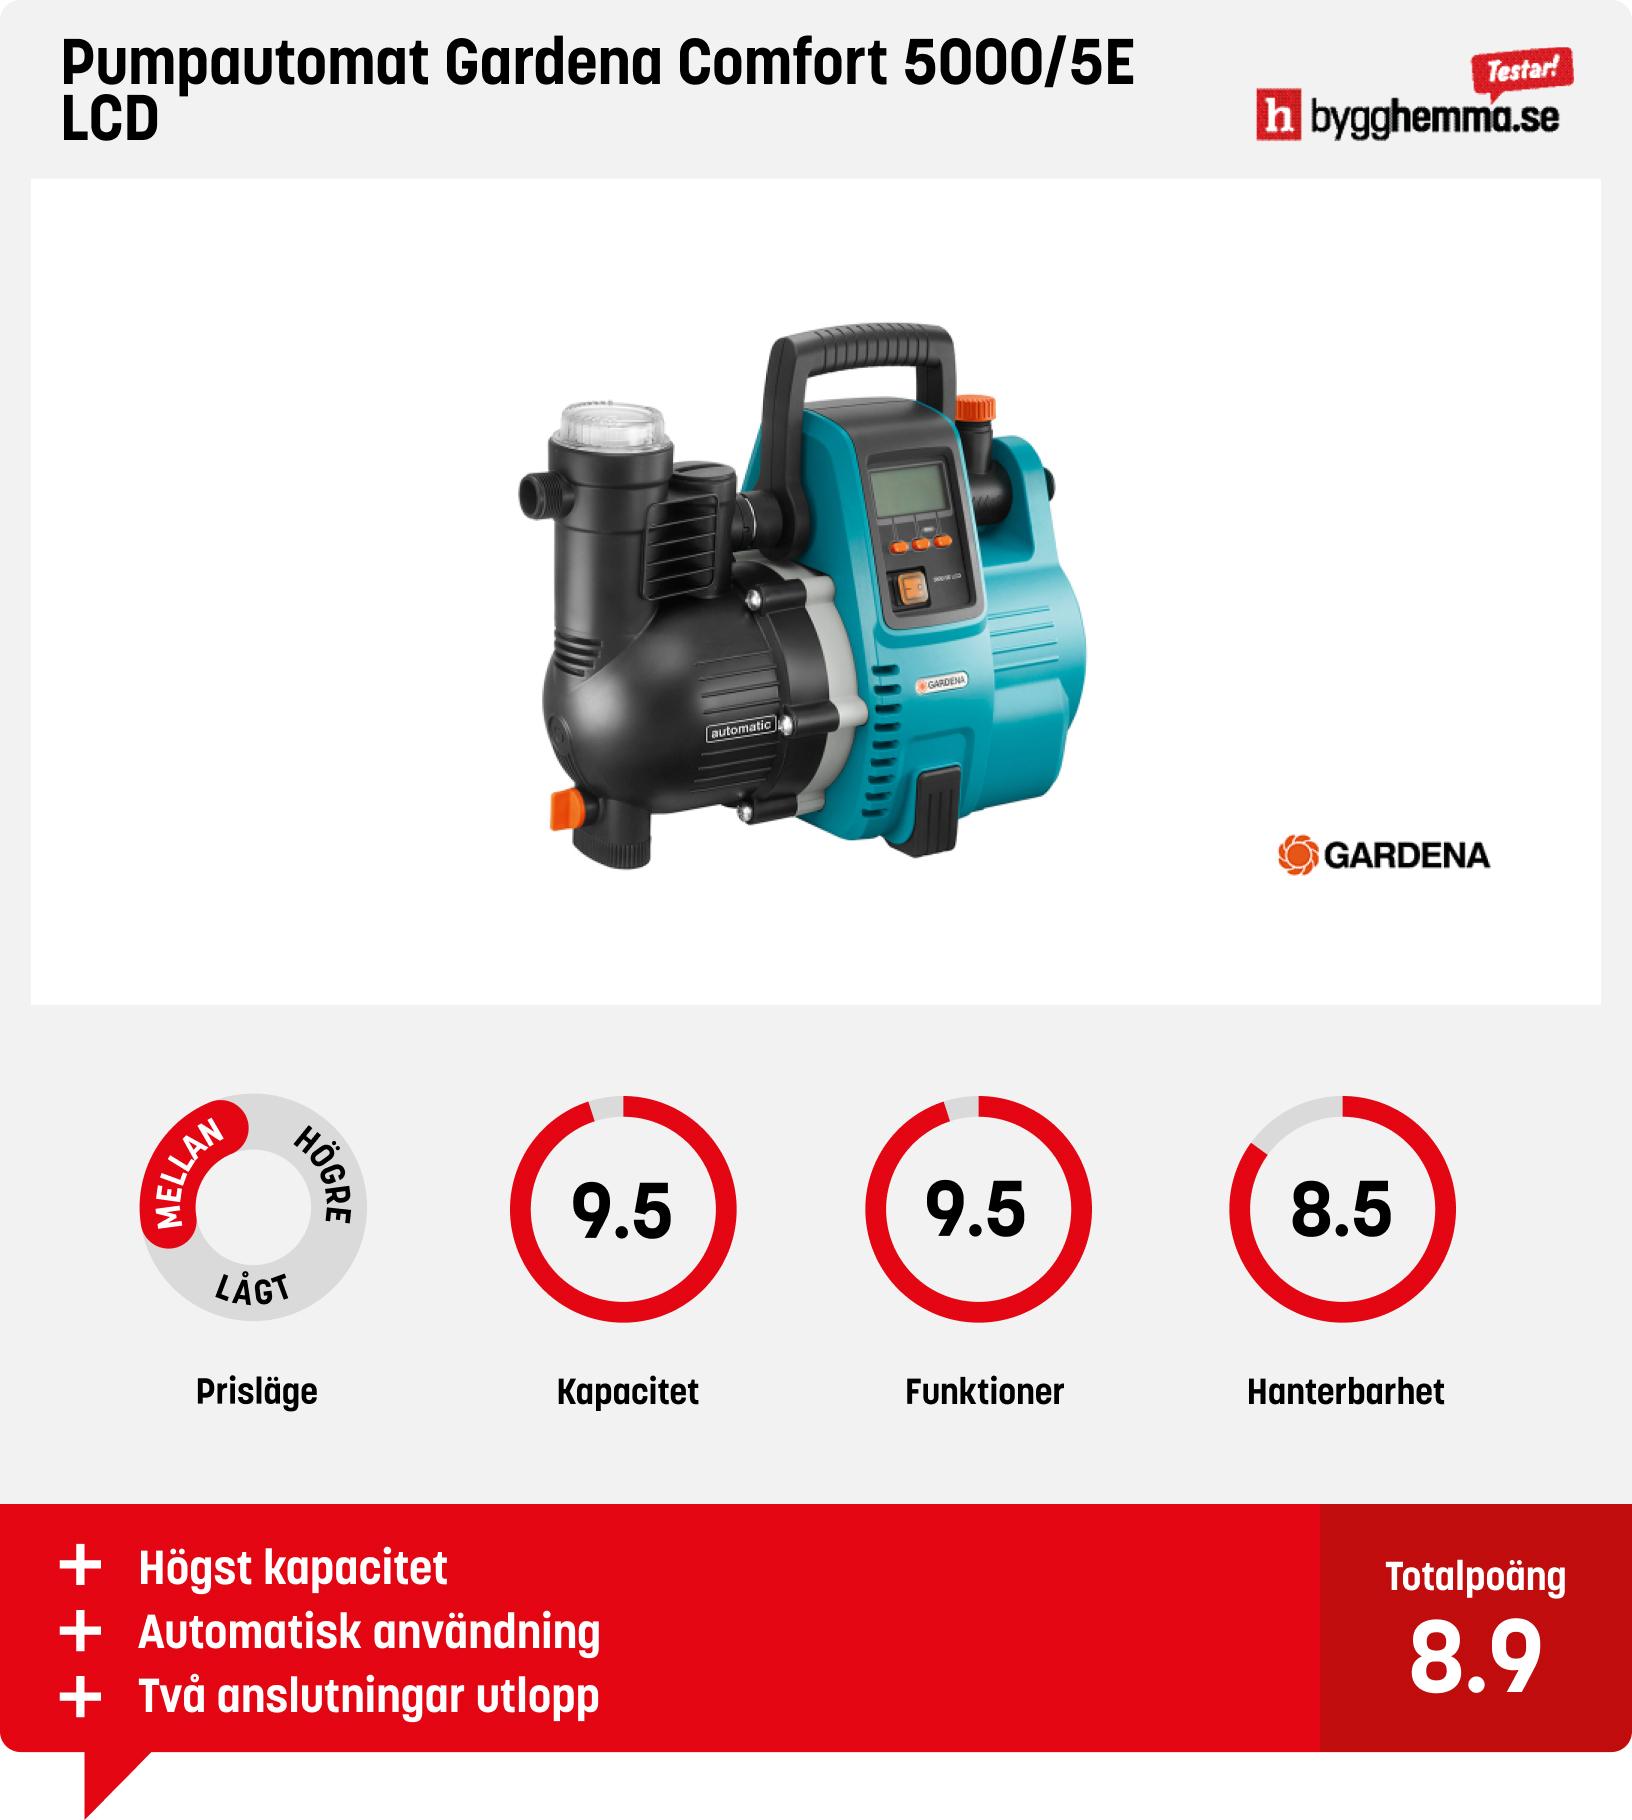 Trädgårdspump bäst i test - Pumpautomat Gardena Comfort 5000/5E LCD